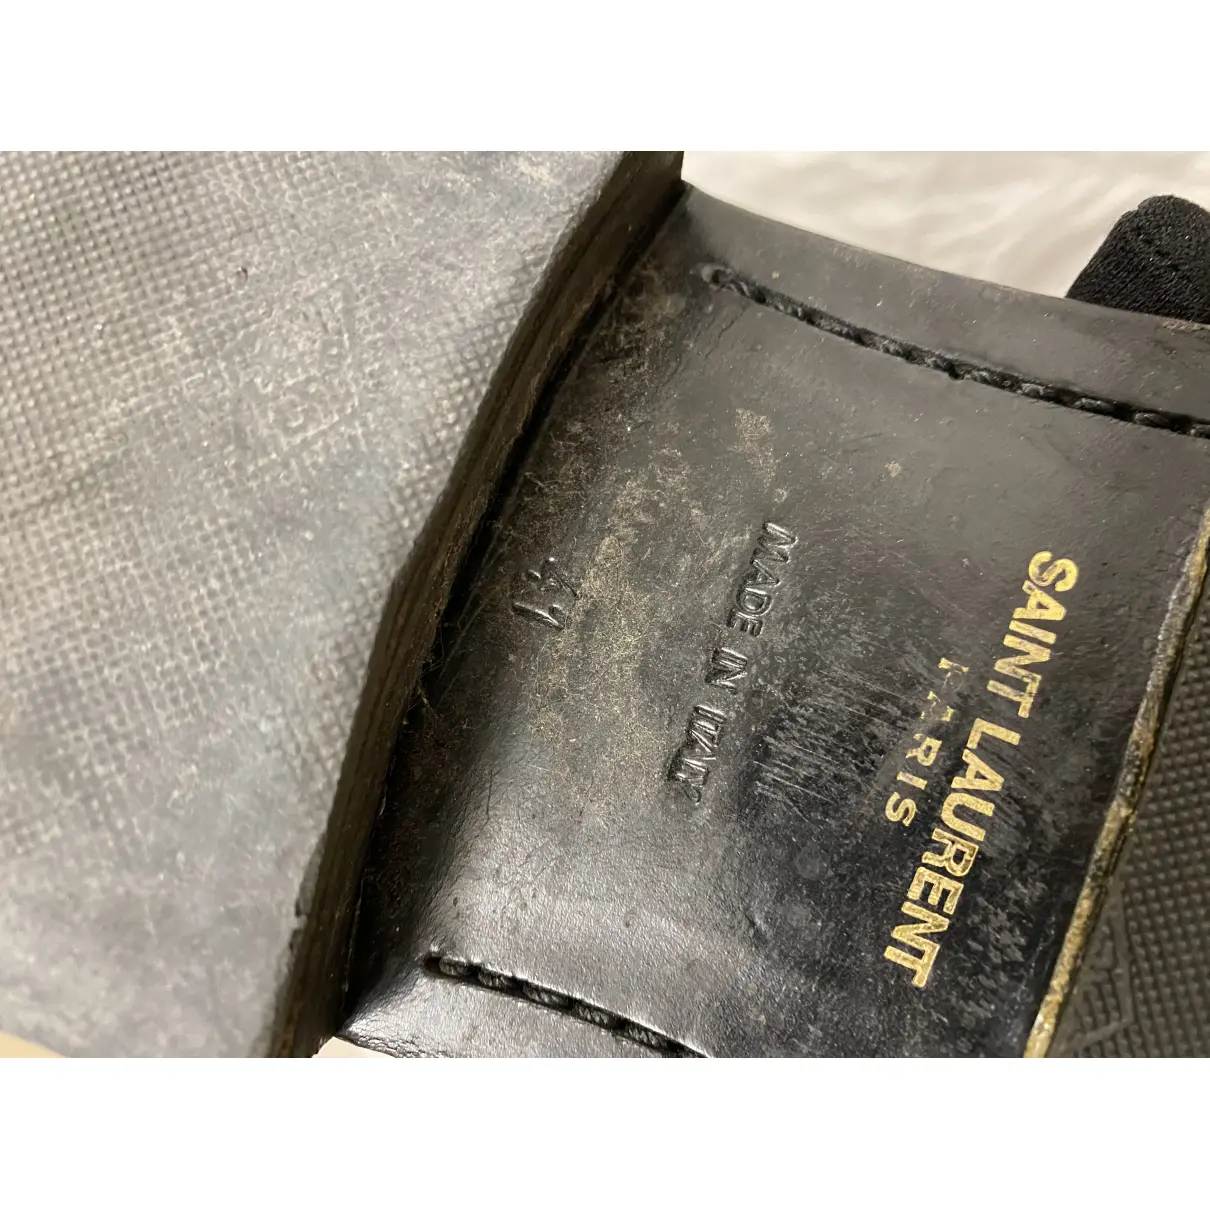 Buy Saint Laurent Army leather boots online